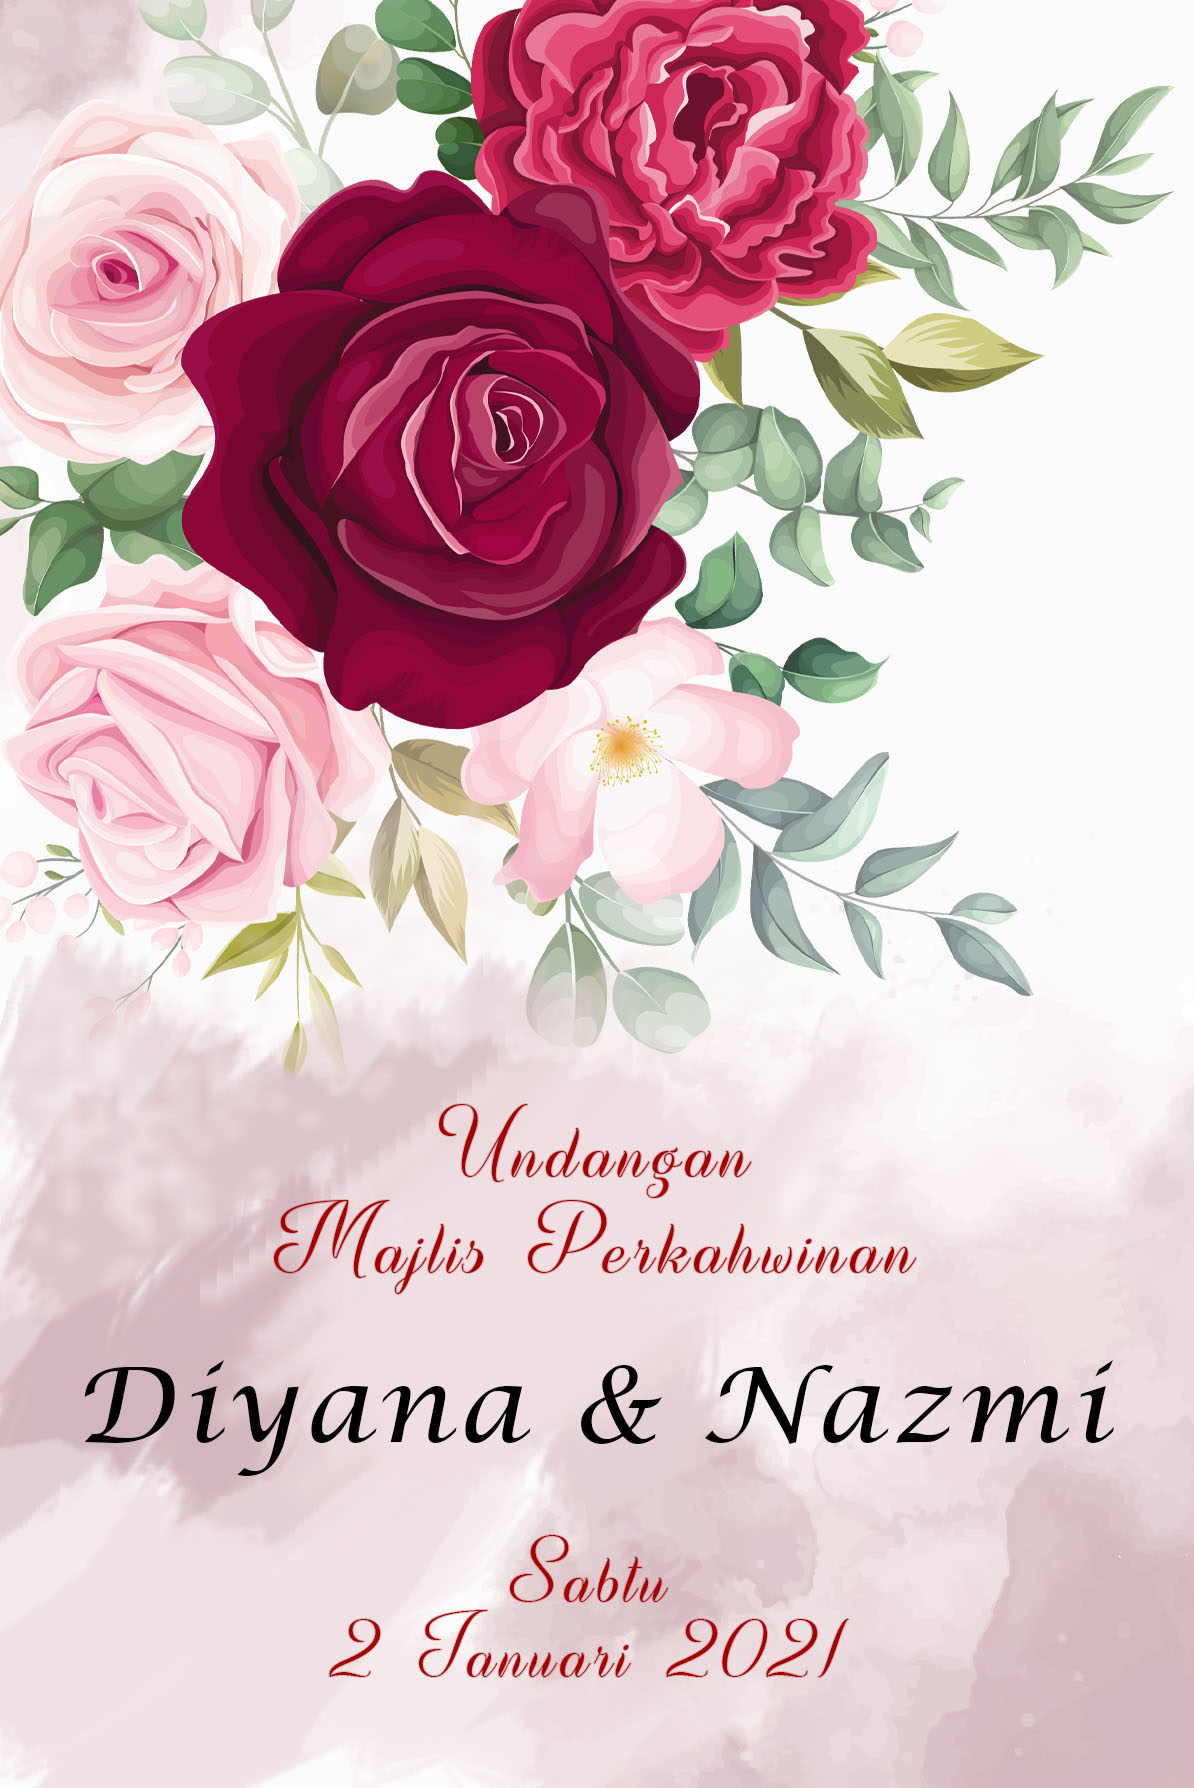 Majlis Perkahwinan  Diyana  Nazmi 02 01 21 POVE my 